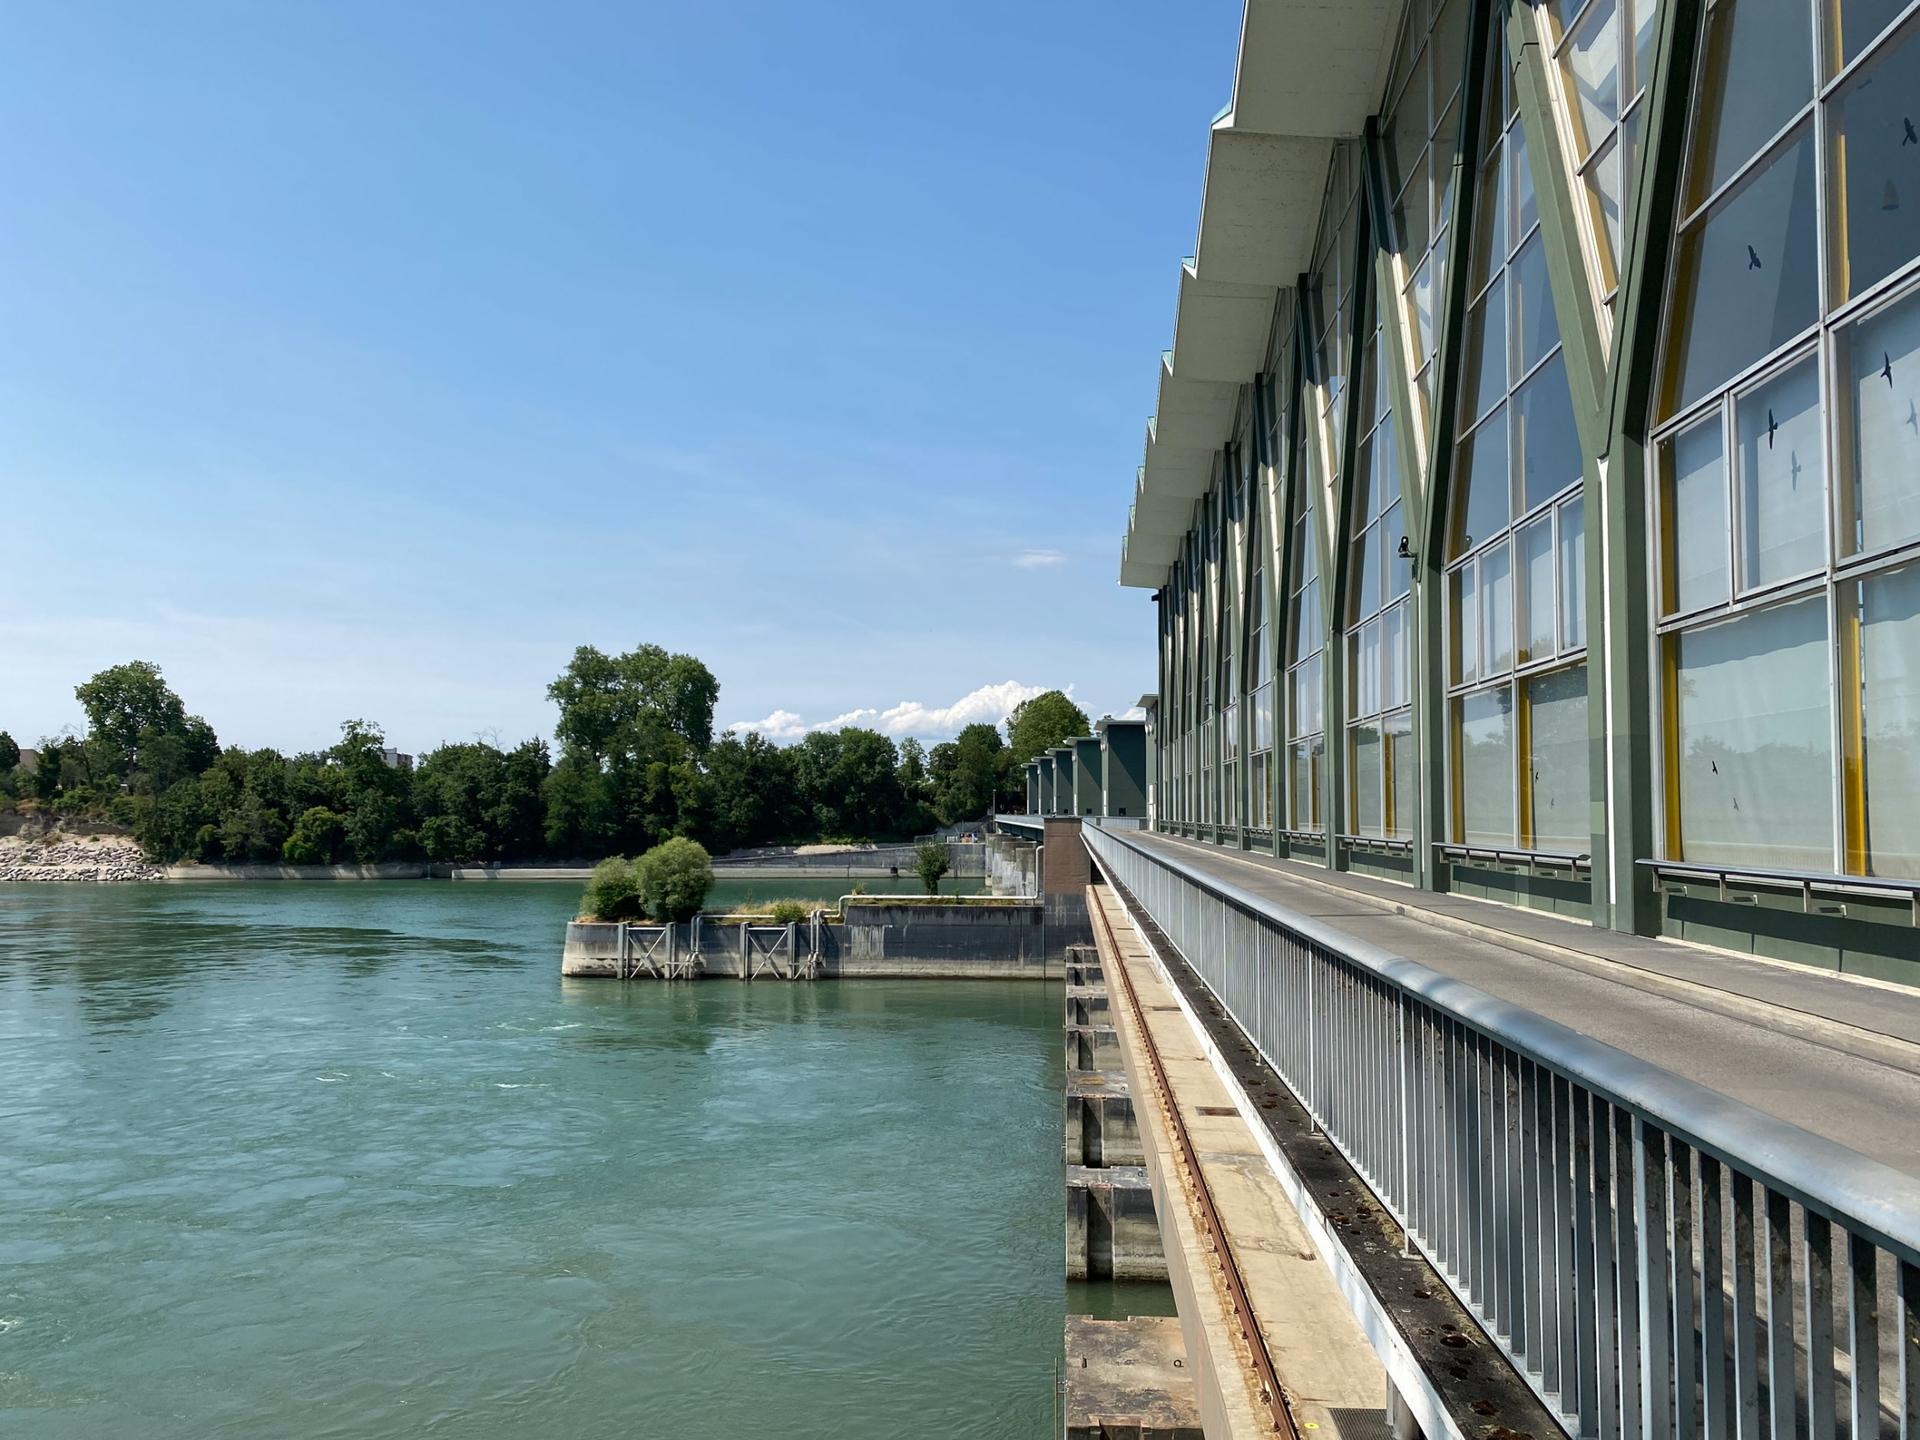 The Birsfelden hydropower facility in Basel, Switzerland, doubles as a public walking path across the Rhine.